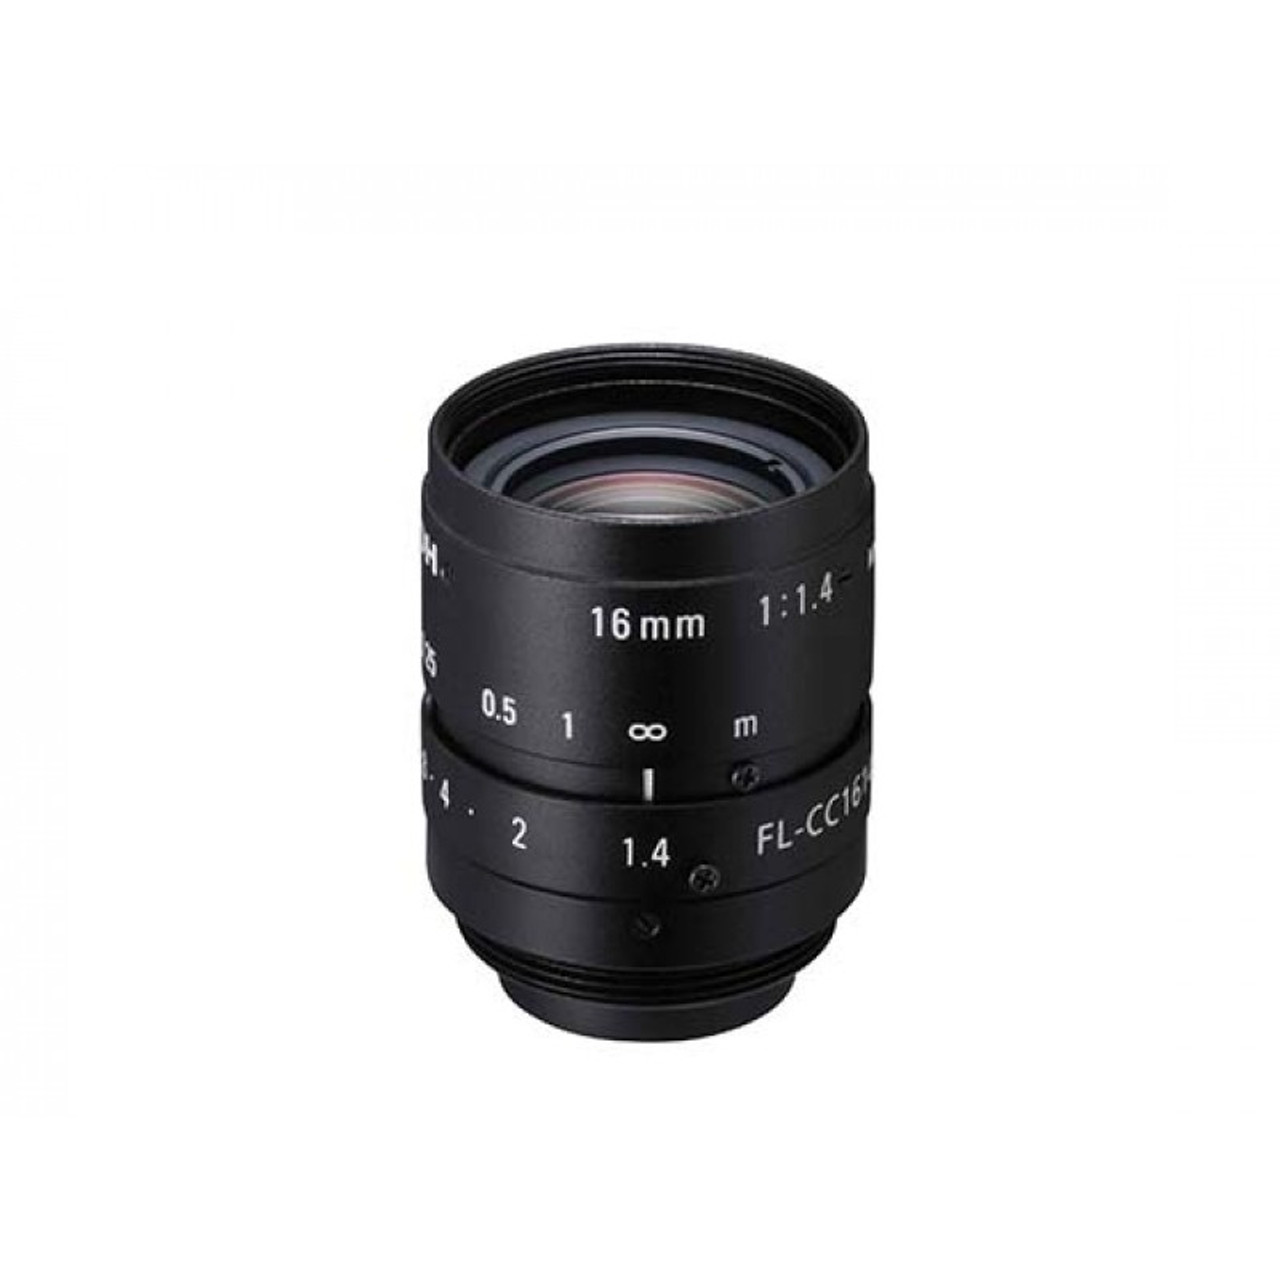 Ricoh FL-CC1614A-2M 2/3 16.0mm F1.4 Manual Iris C-Mount Lens